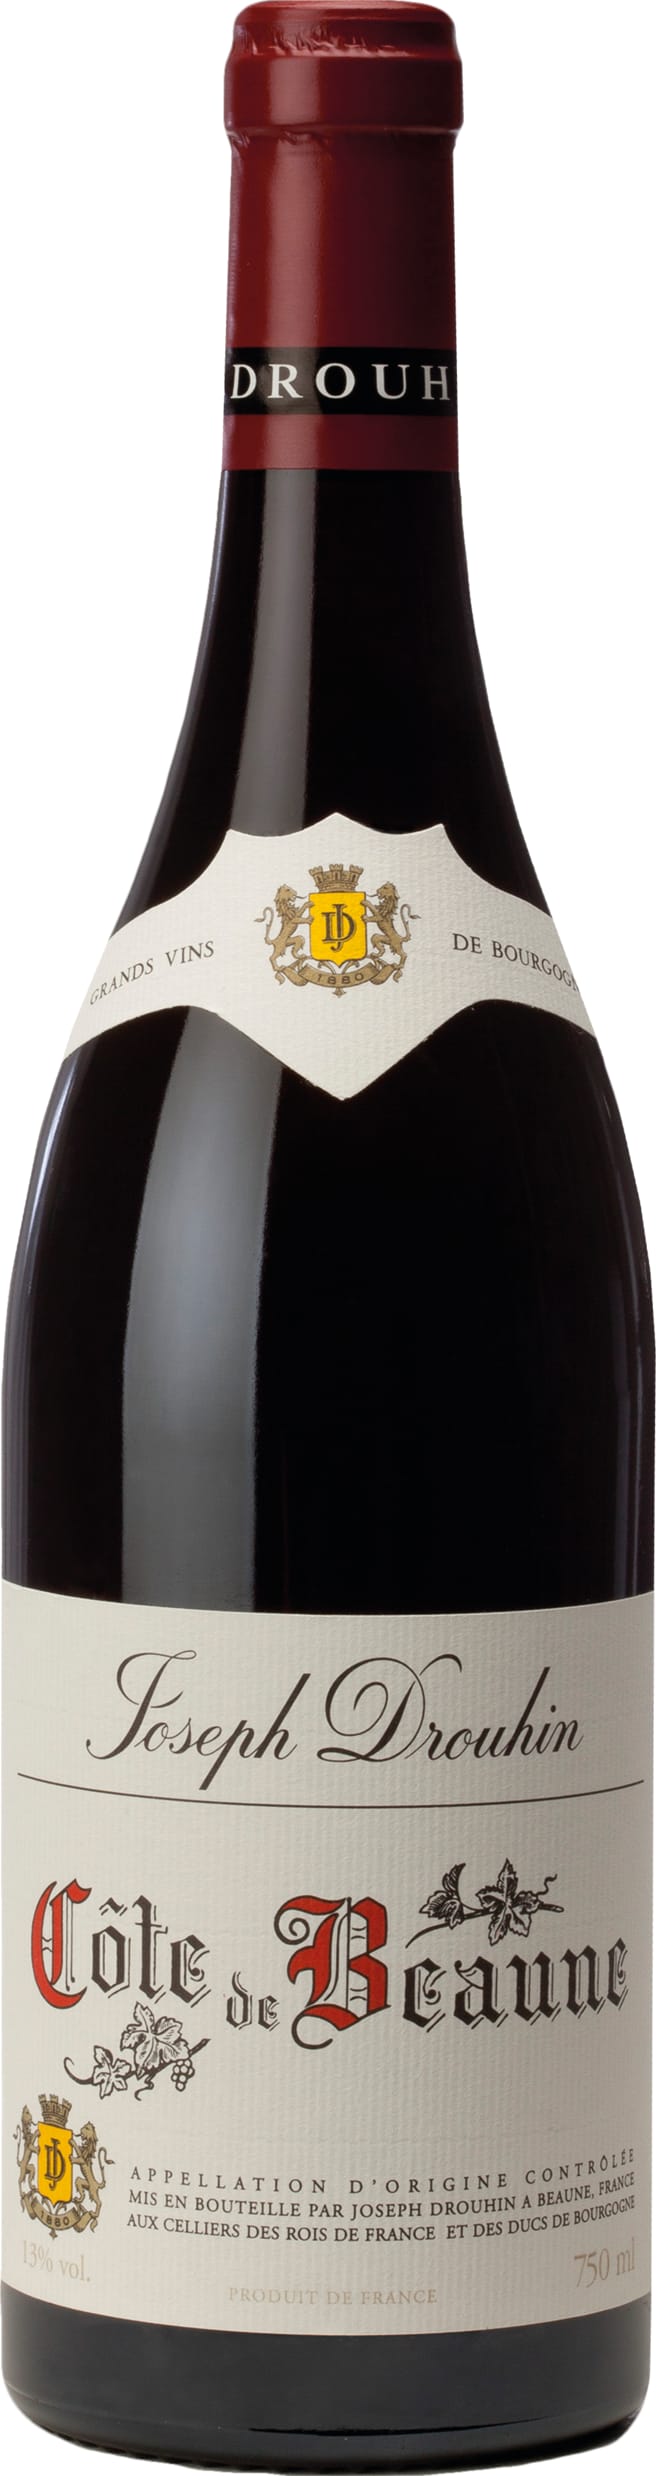 Joseph Drouhin Cote de Beaune 2017 75cl - Buy Joseph Drouhin Wines from GREAT WINES DIRECT wine shop